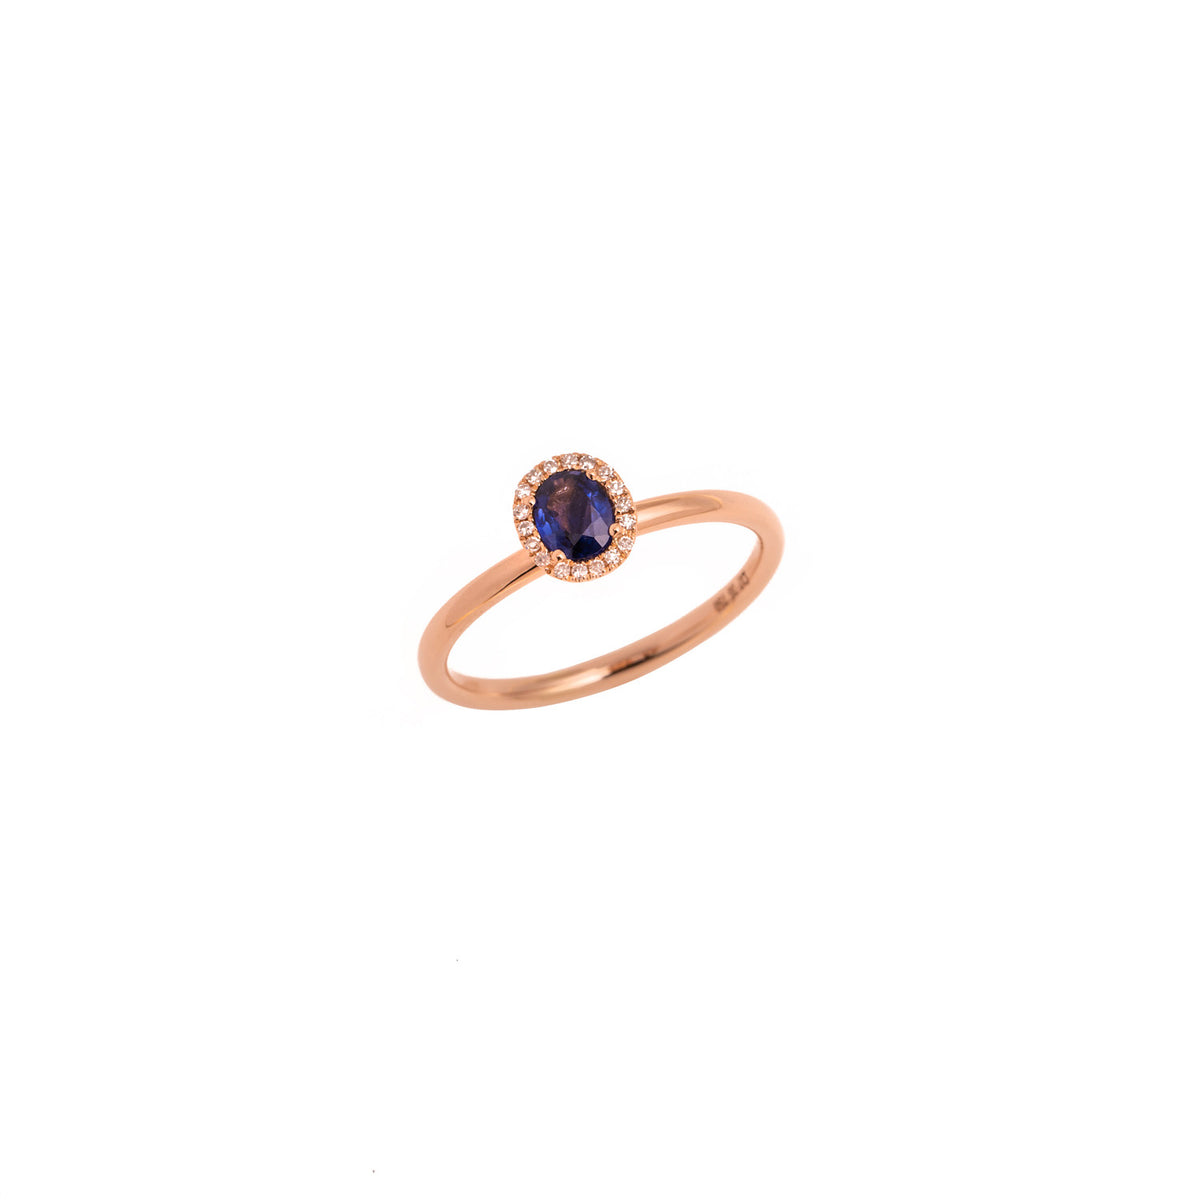 Gold Ring. Diamond Ring. Fine Jewelry. Anatol Jewelry. Kifissia. Golden Hall. Athens. Diamond Jewelry. Χρυσά κοσμήματα. Χρυσά δαχτυλίδια. Κοσμήματα Κηφισιά. Ανατολ. Δαχτυλίδι με διαμάντια. Oval sapphire ring. Blue sapphire ring.